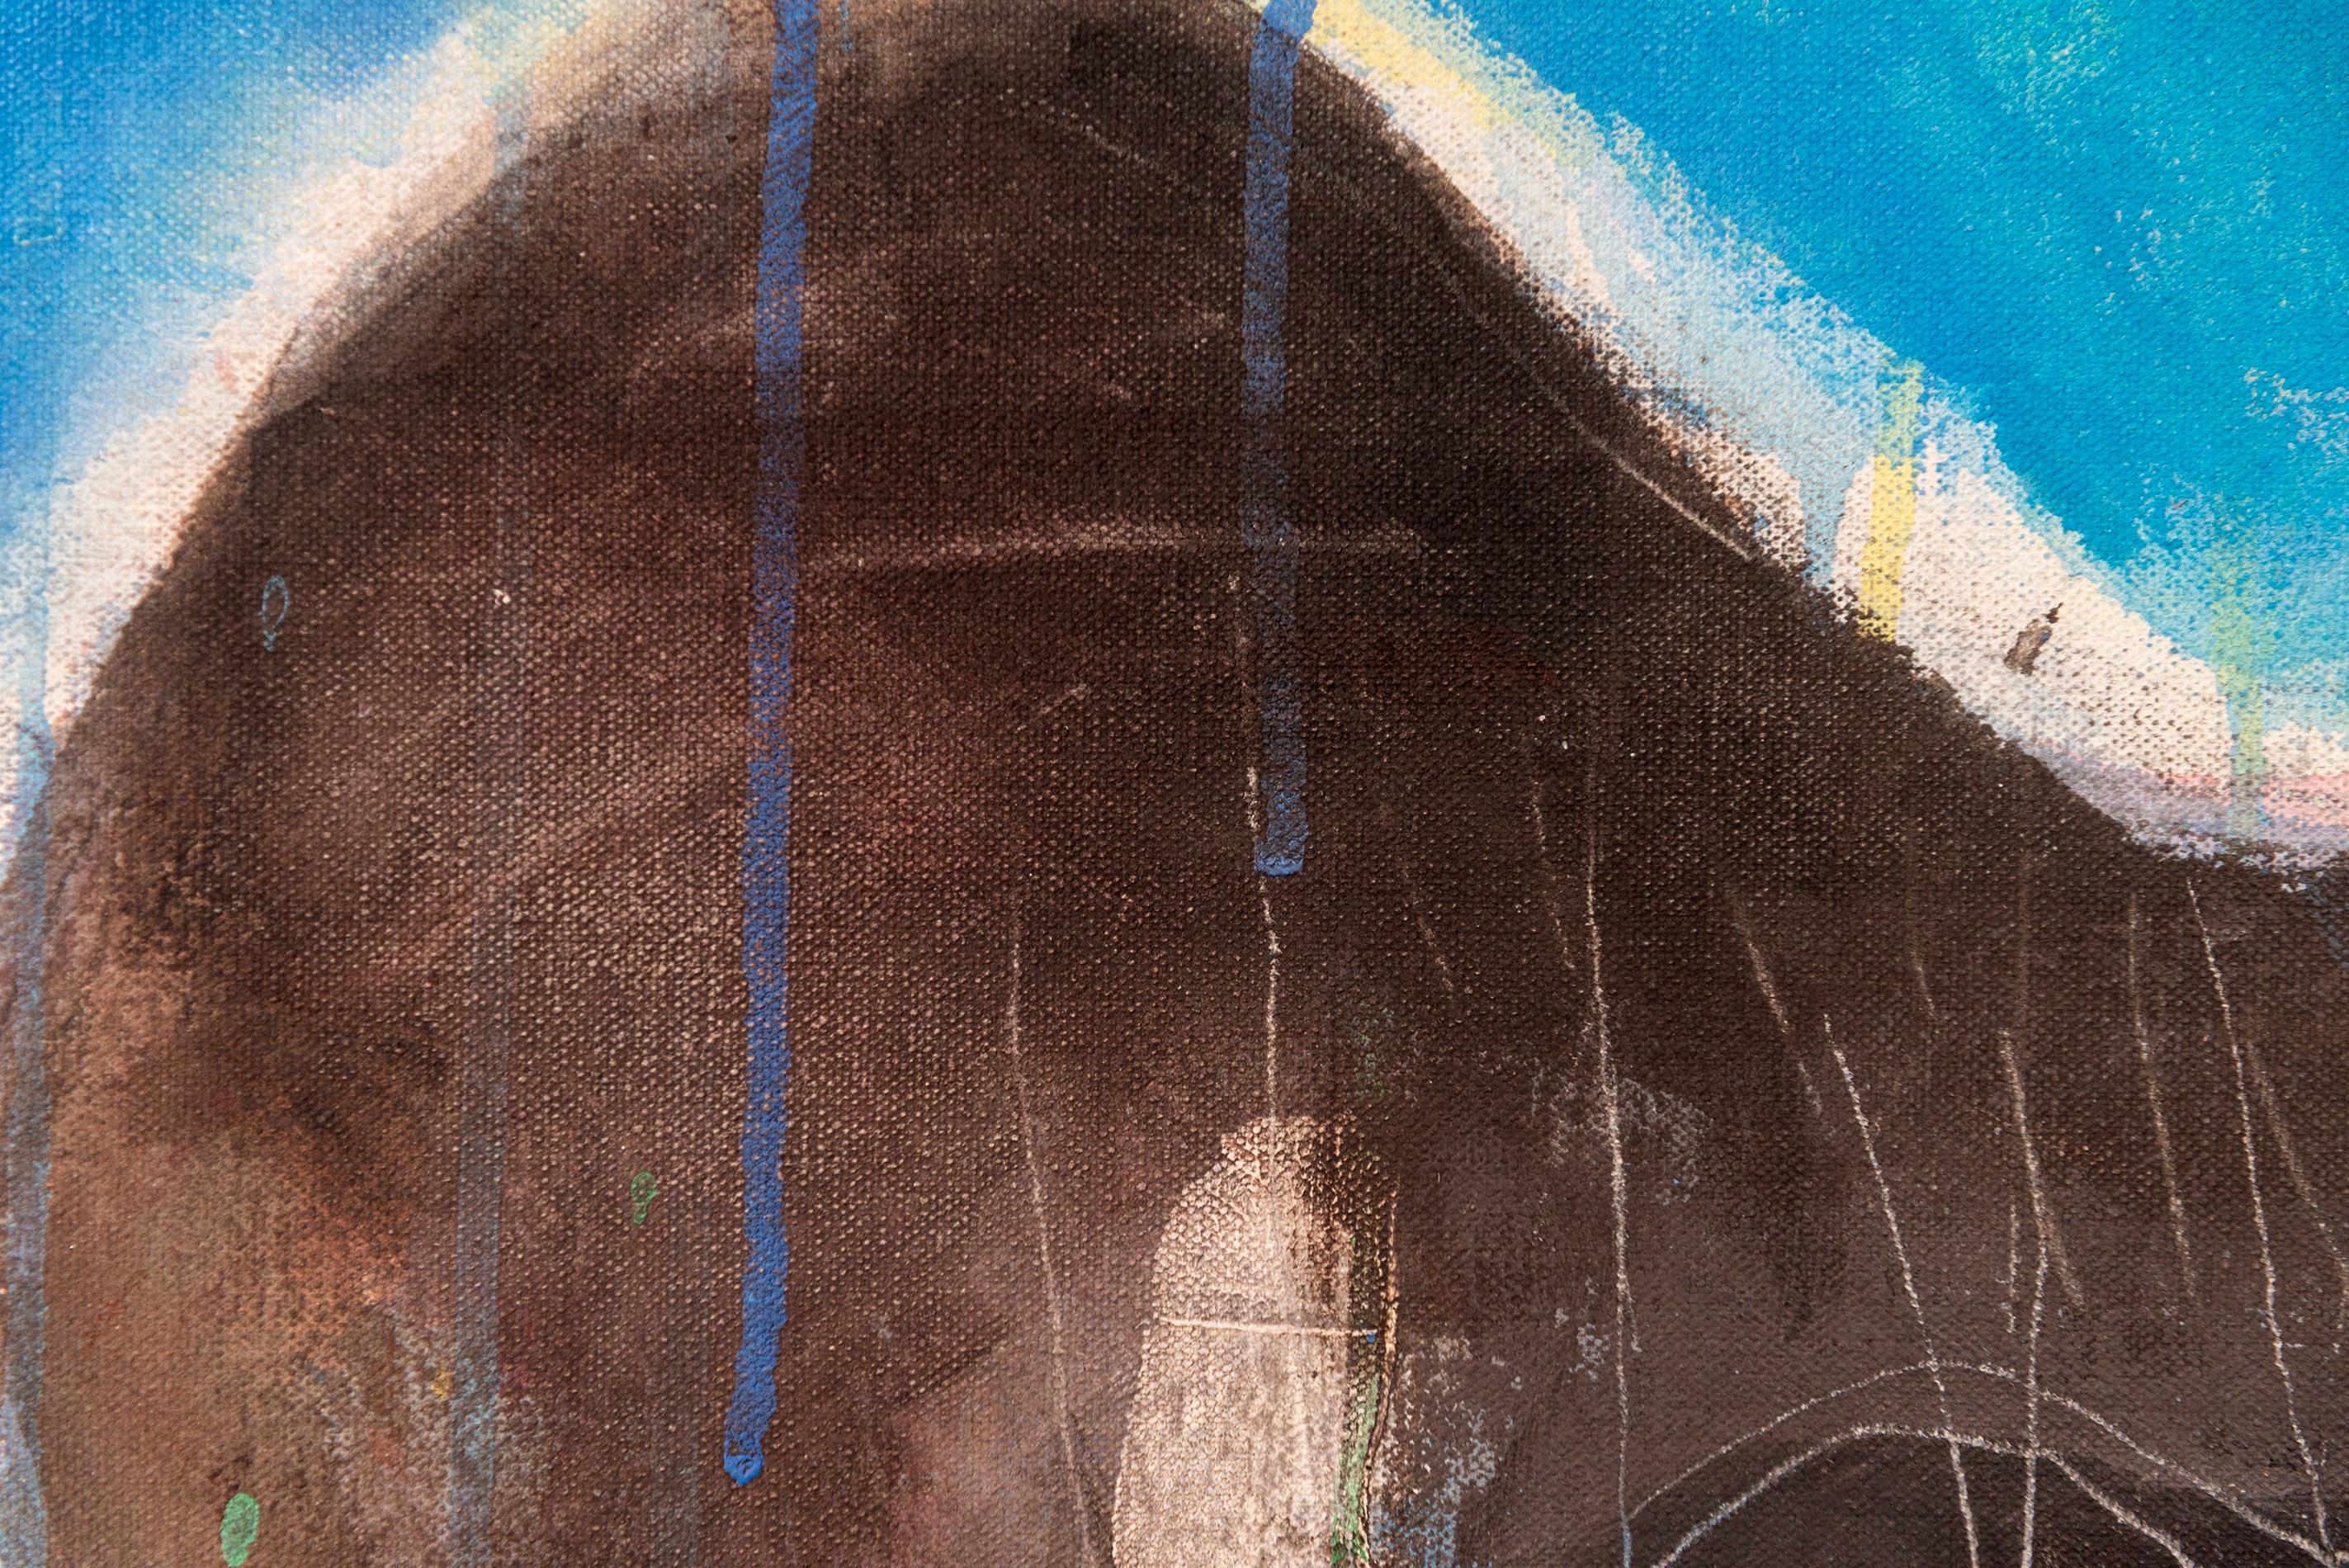 Northwest Passage No 5 - blue, black, indigenous, abstract, acrylic on canvas 3